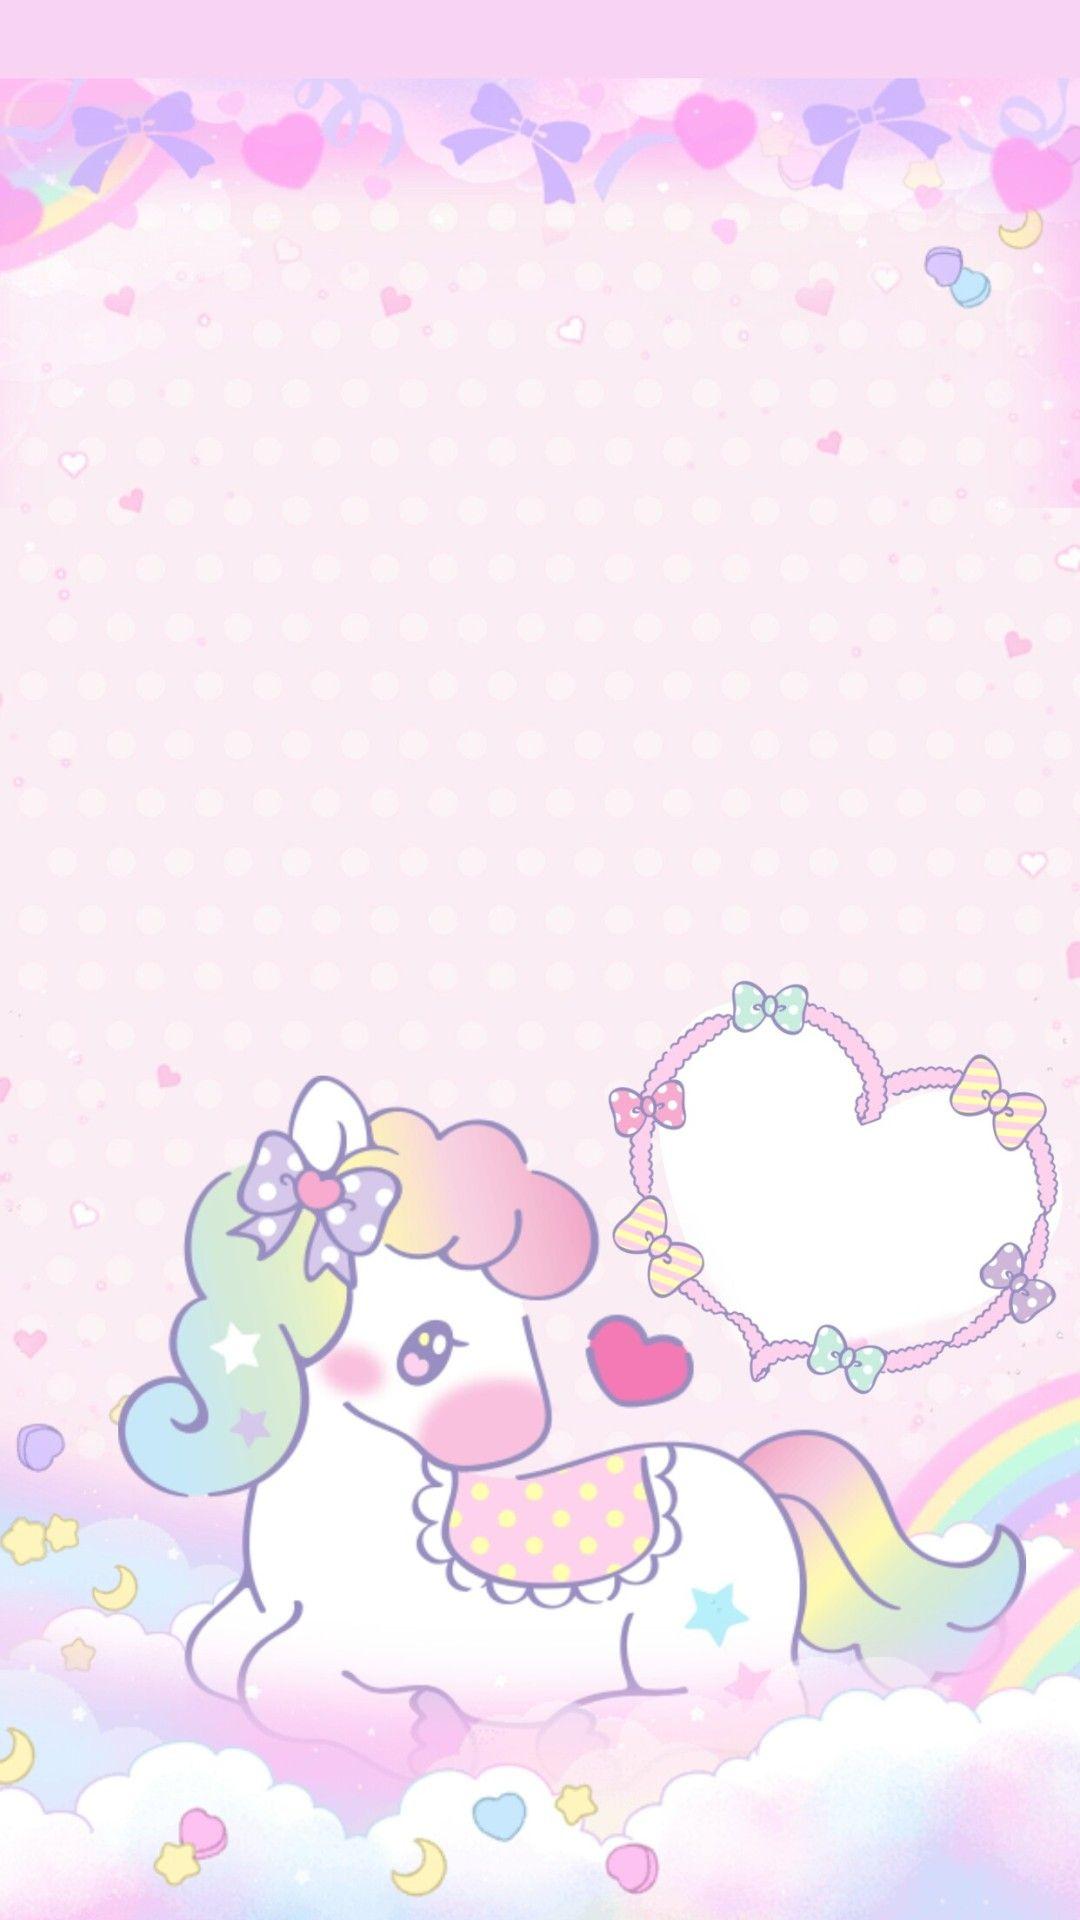 heymi243. My melody unicorn wallpaper by me. Unicorn wallpaper, Unicorn wallpaper cute, Sanrio wallpaper